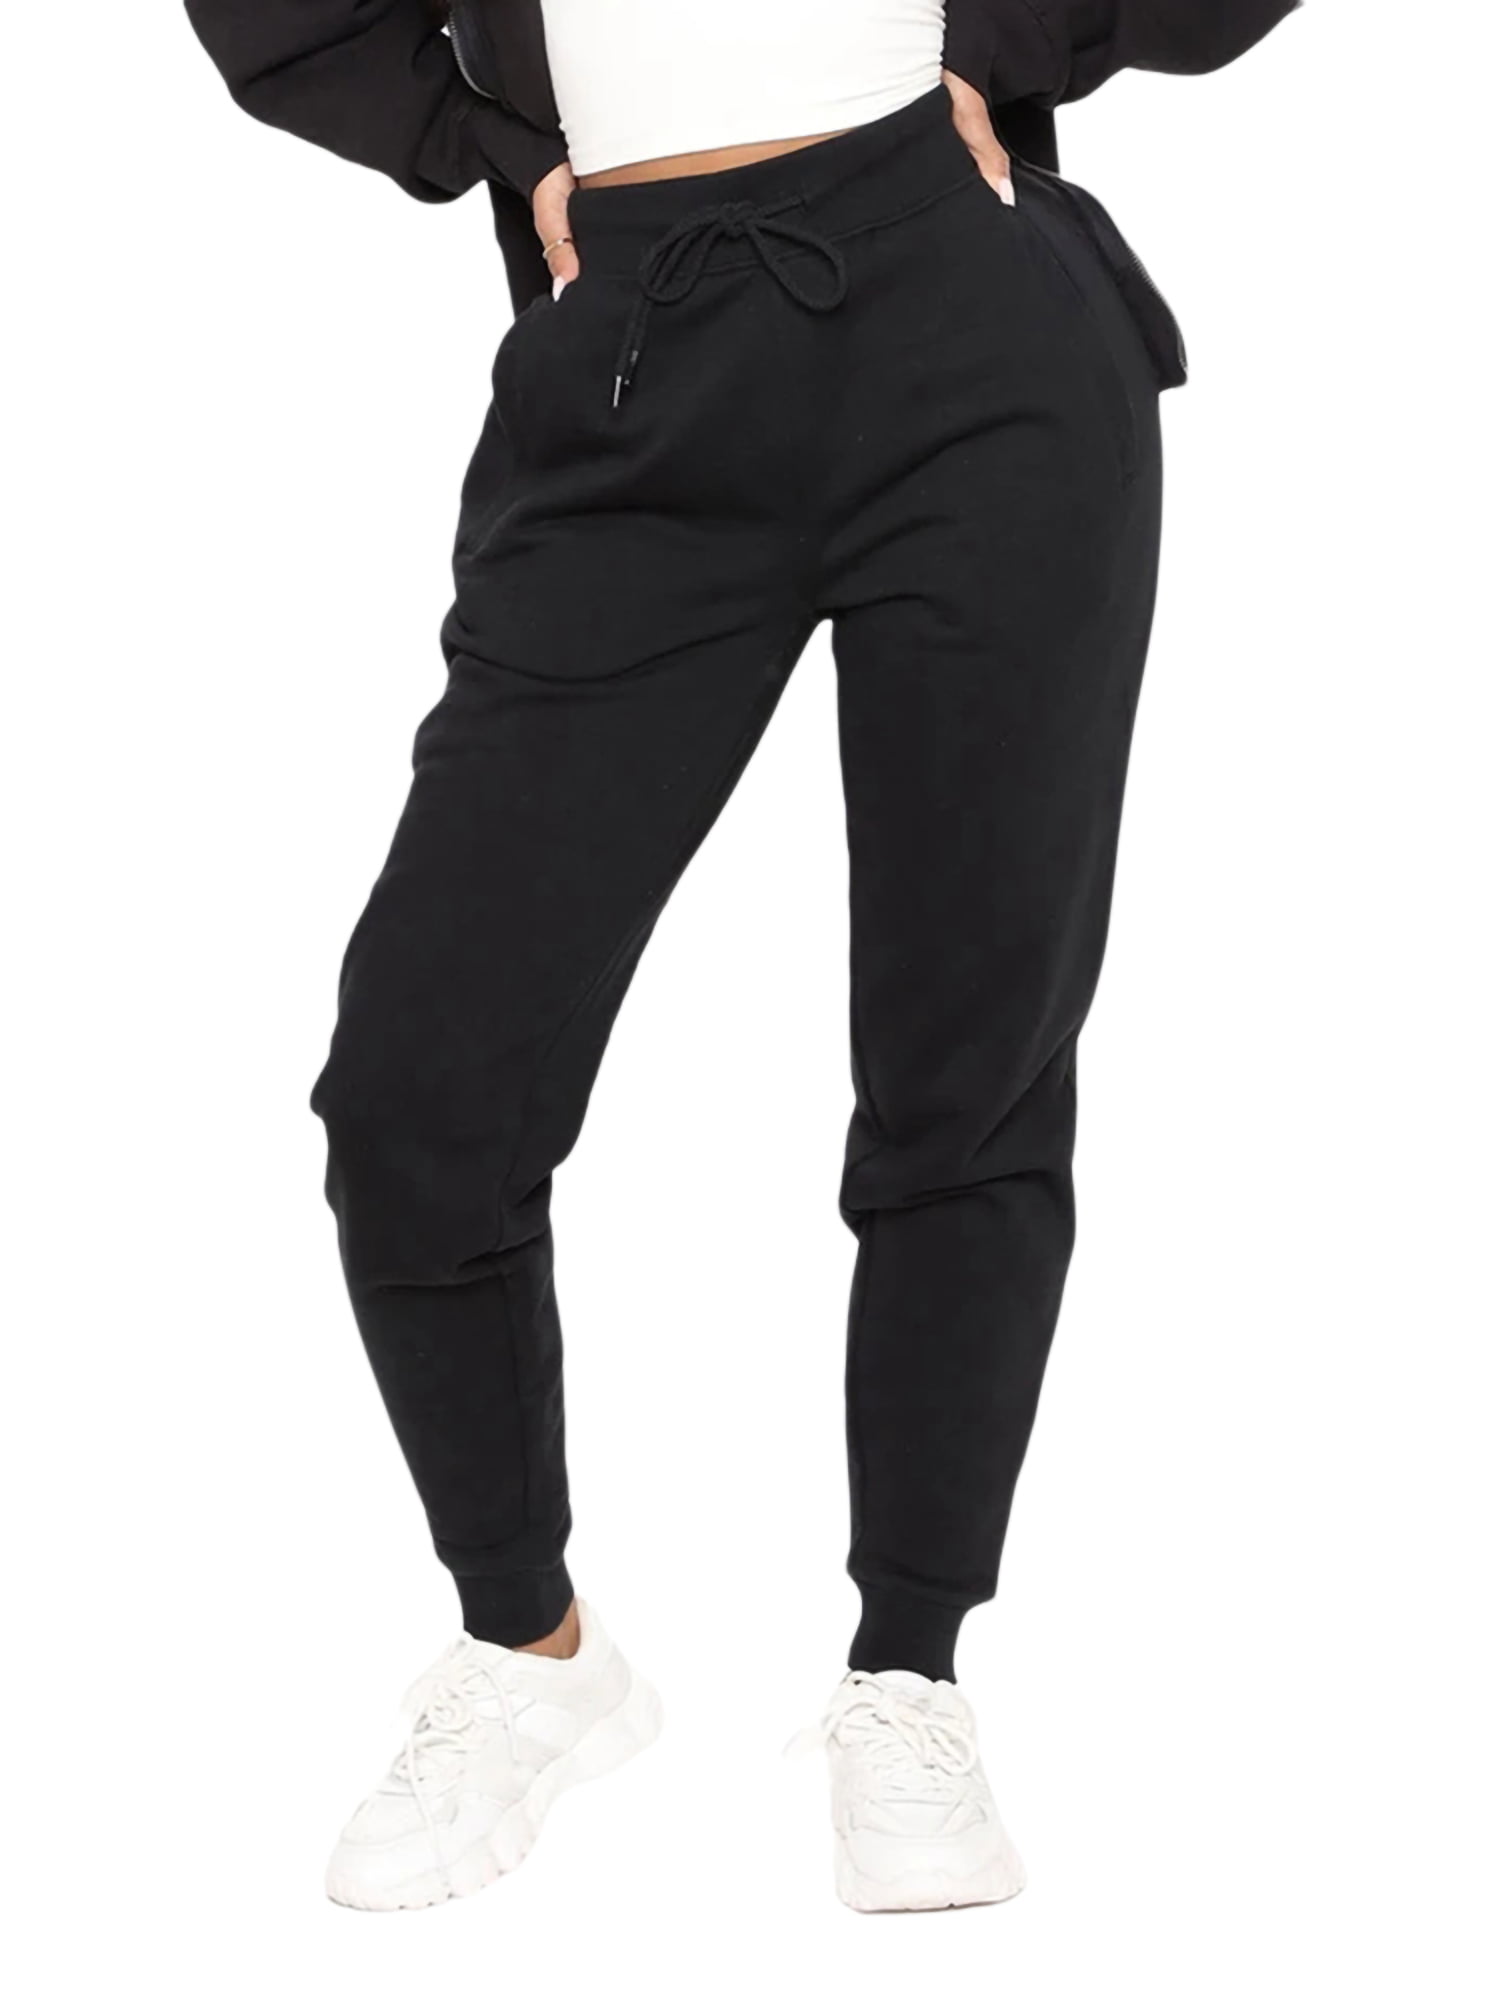 Sweatpants for Women Cinch Bottom Trousers Teen Girls High Waisted Joggers  Summer Workout Baggy Yoga Pants 